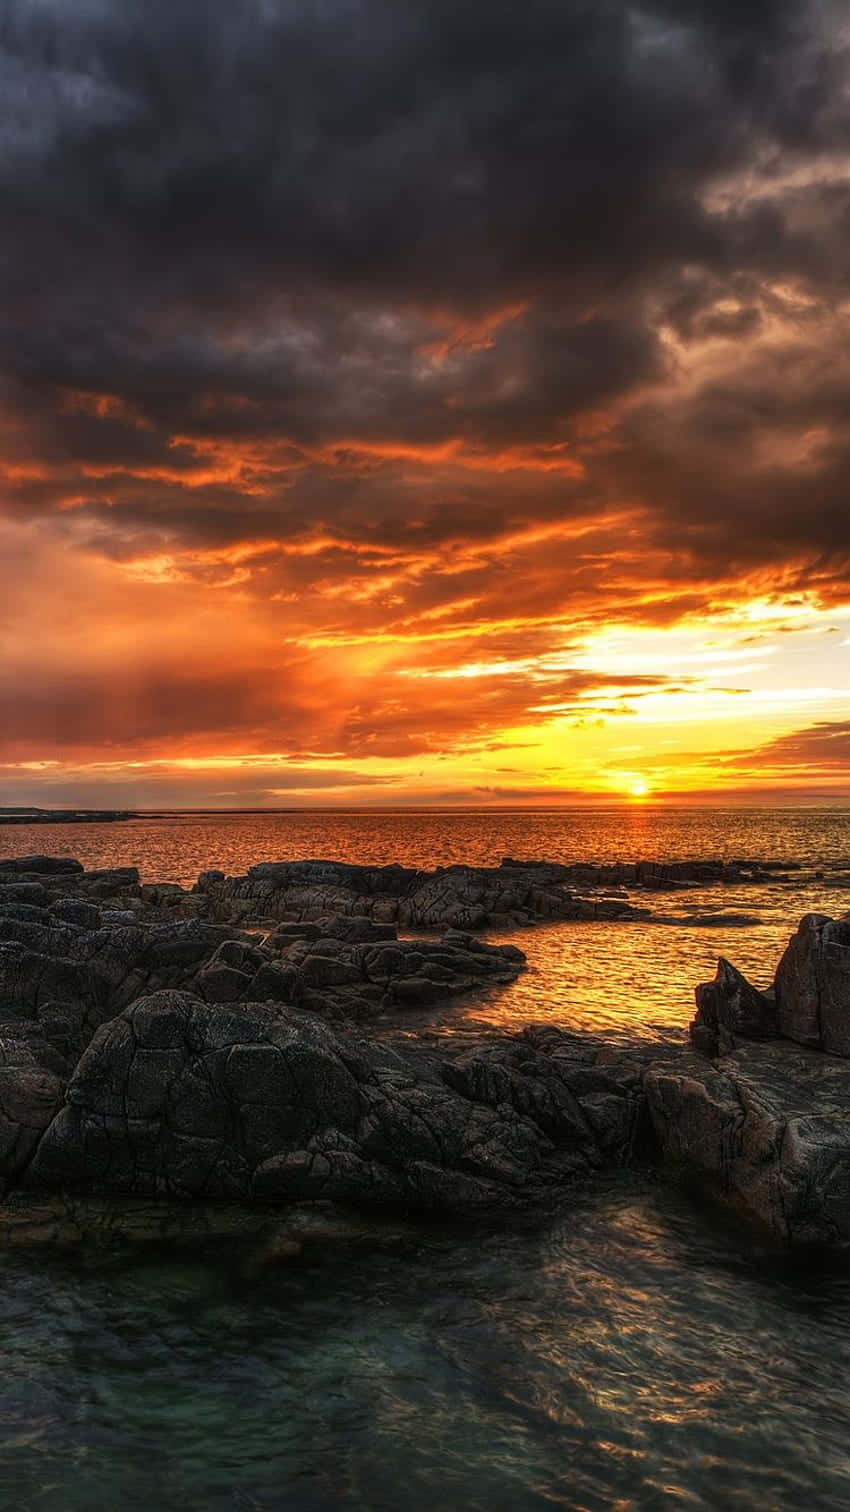 Iphone X Malibu baggrund Stormy Sunset Sky